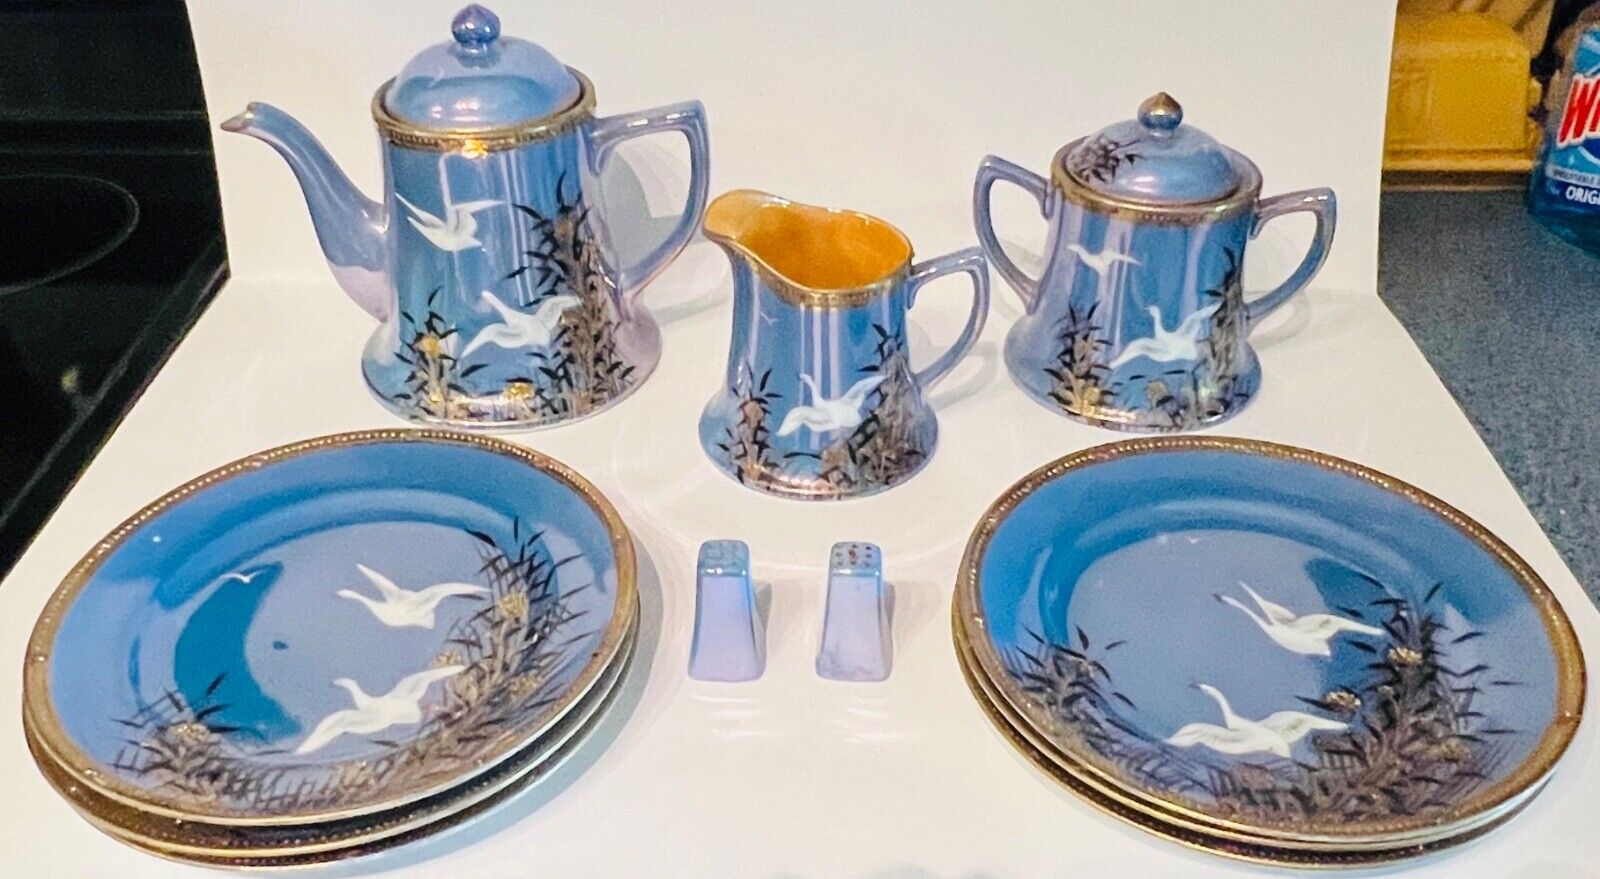 Takito Company TT Lusterware Tea Set Hand Painted Blue with Birds (13 Piece Set)